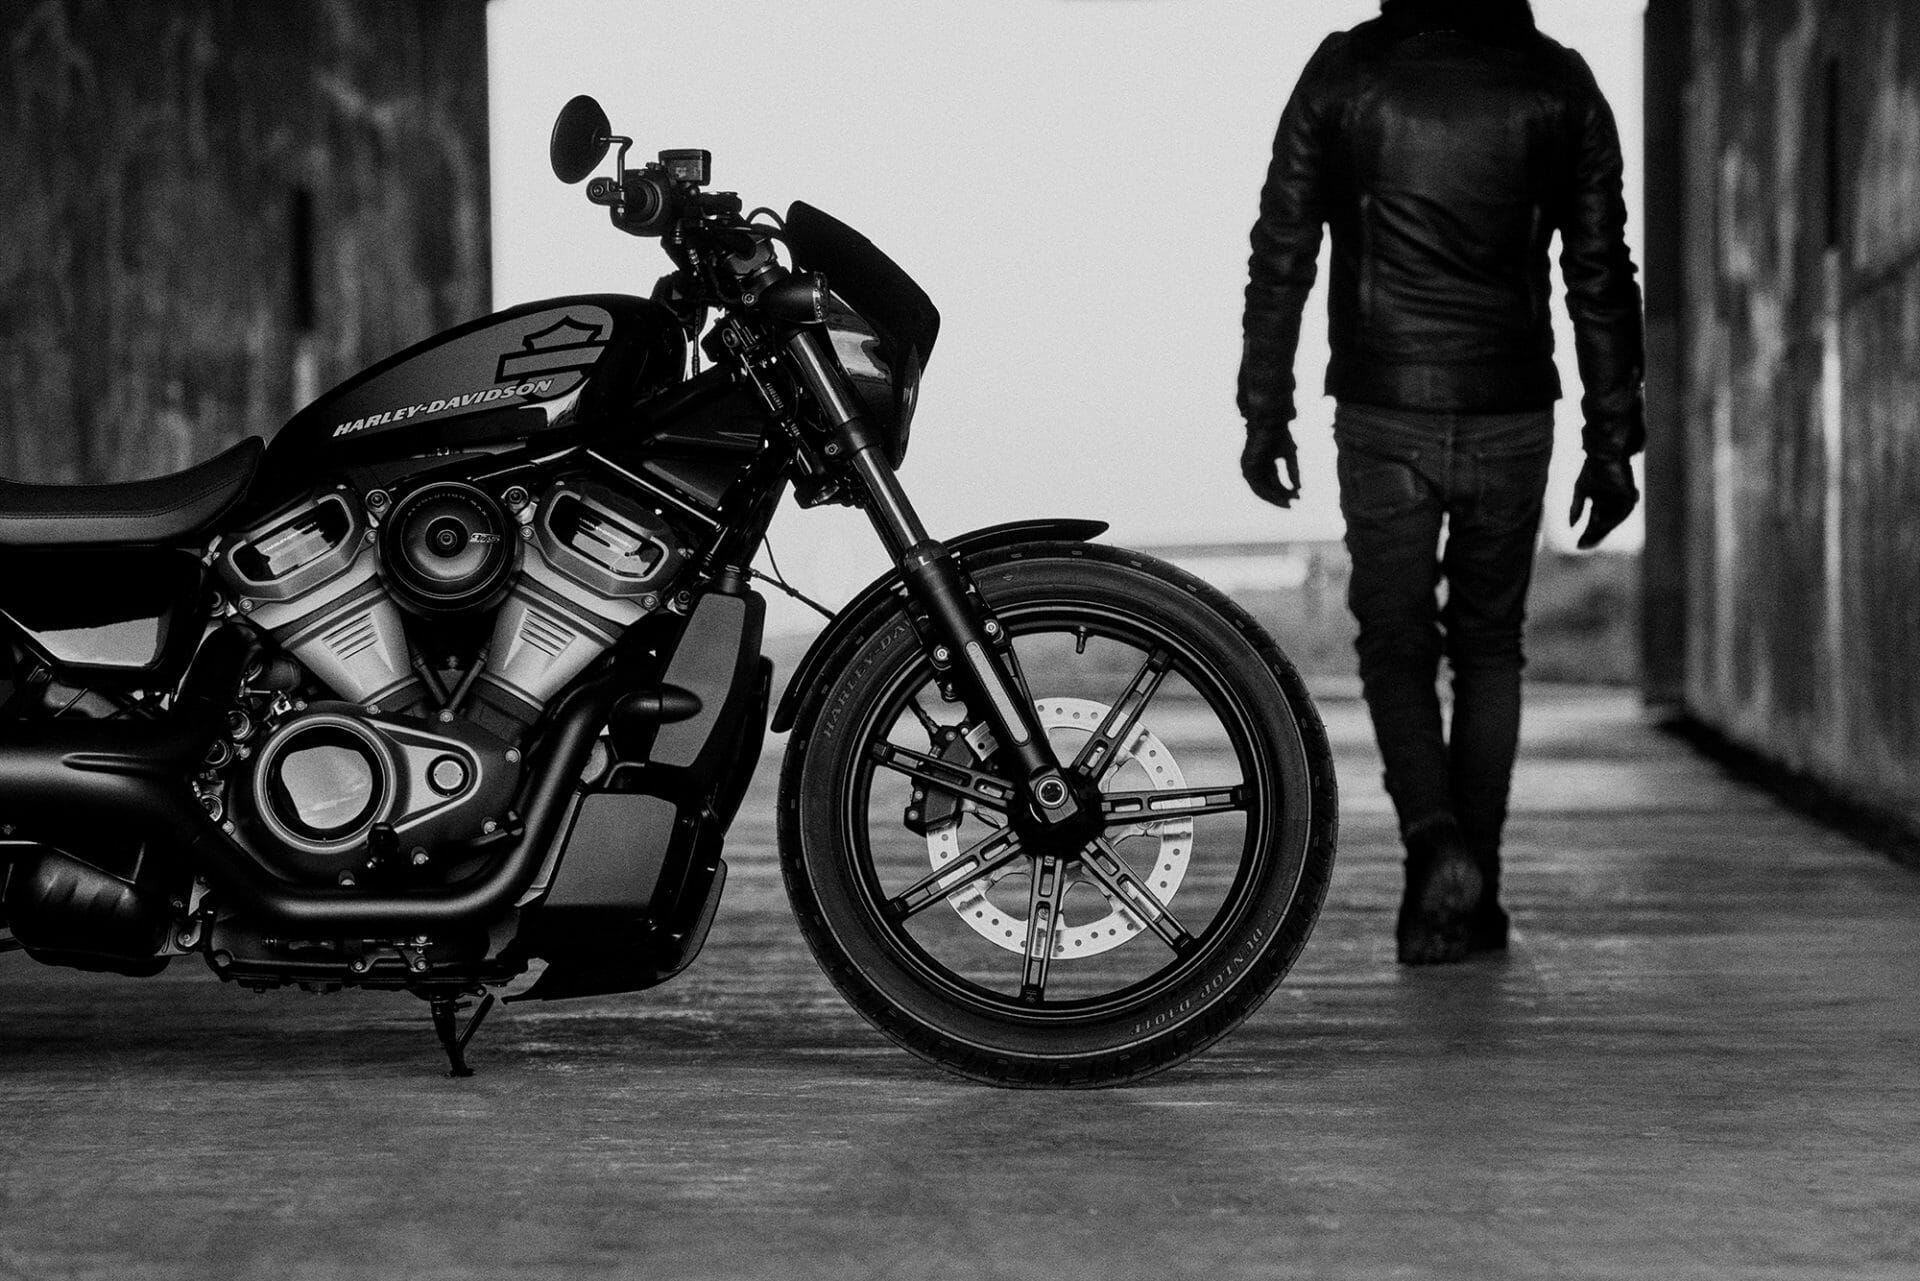 Harley-Davidson Nightster presented
- MOTORCYCLES.NEWS